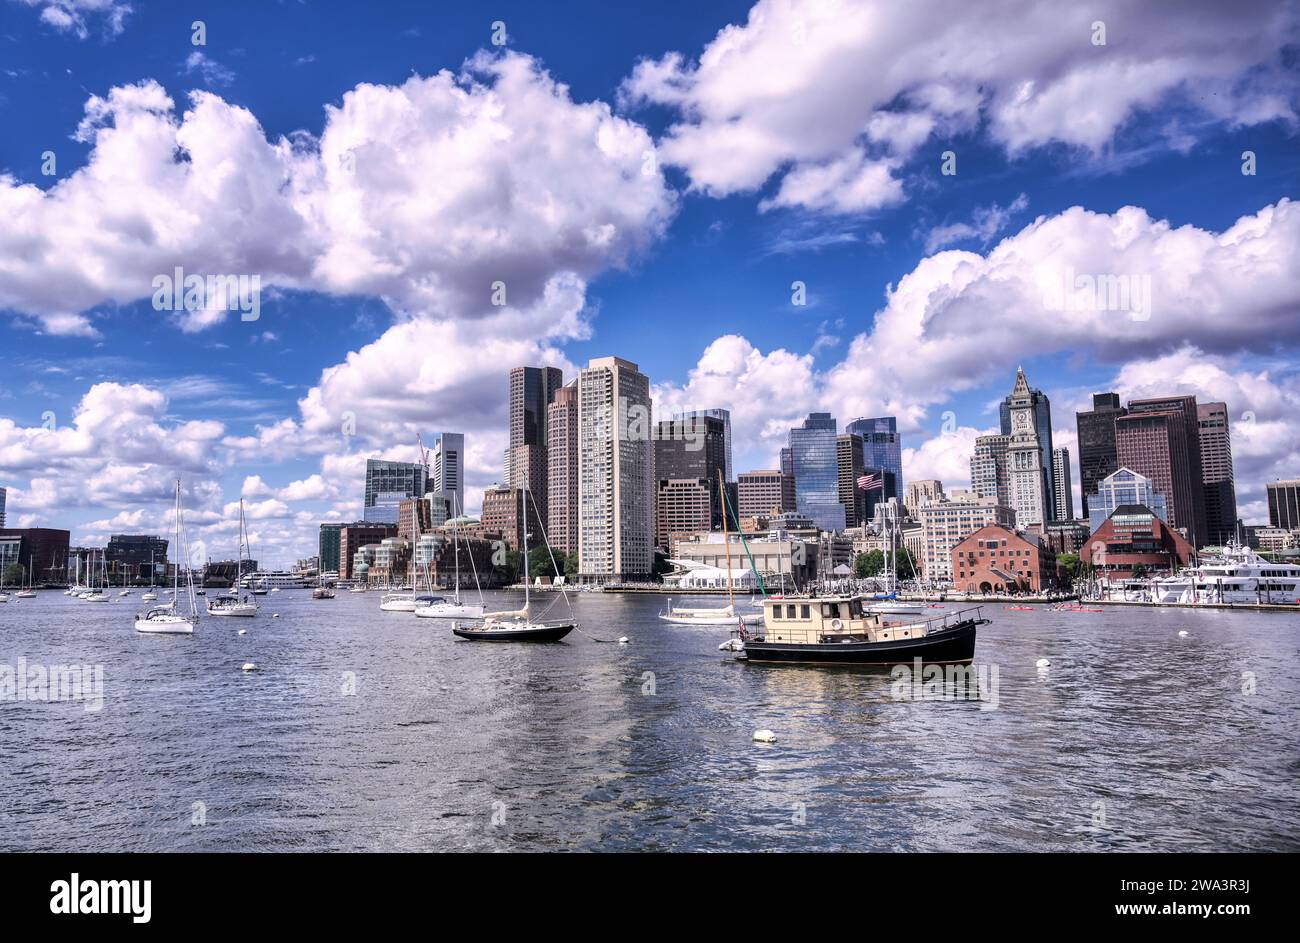 The Boston, Massachusetts skyline from Boston Harbor. Stock Photo